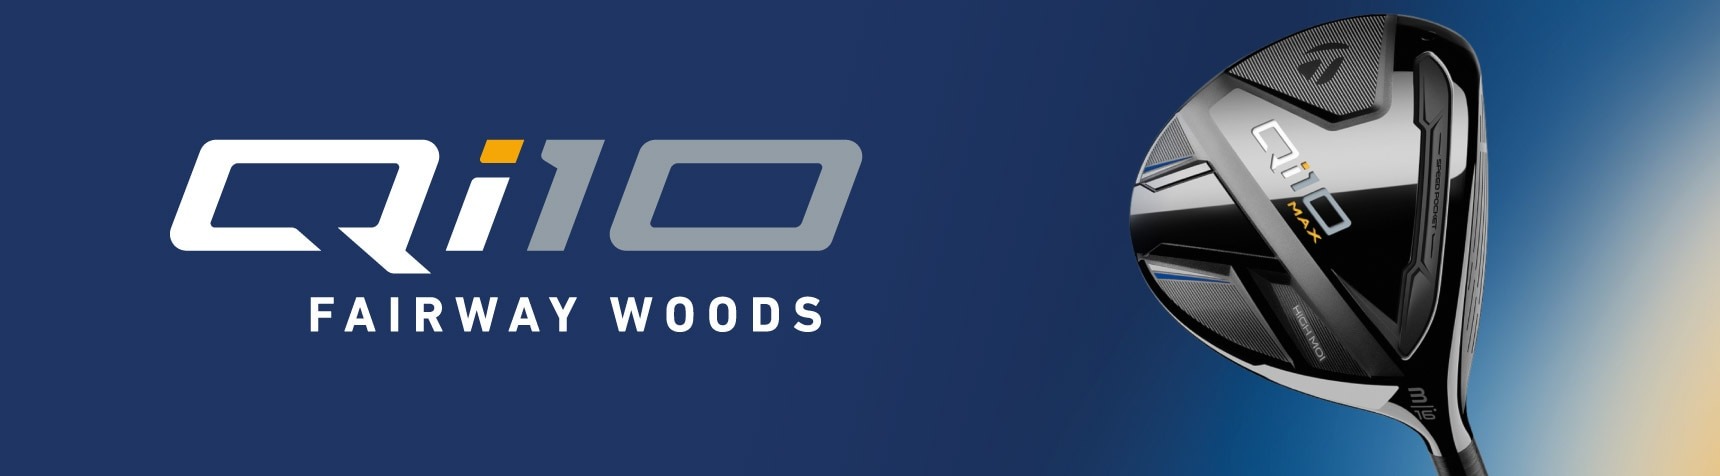 fairwaywoods